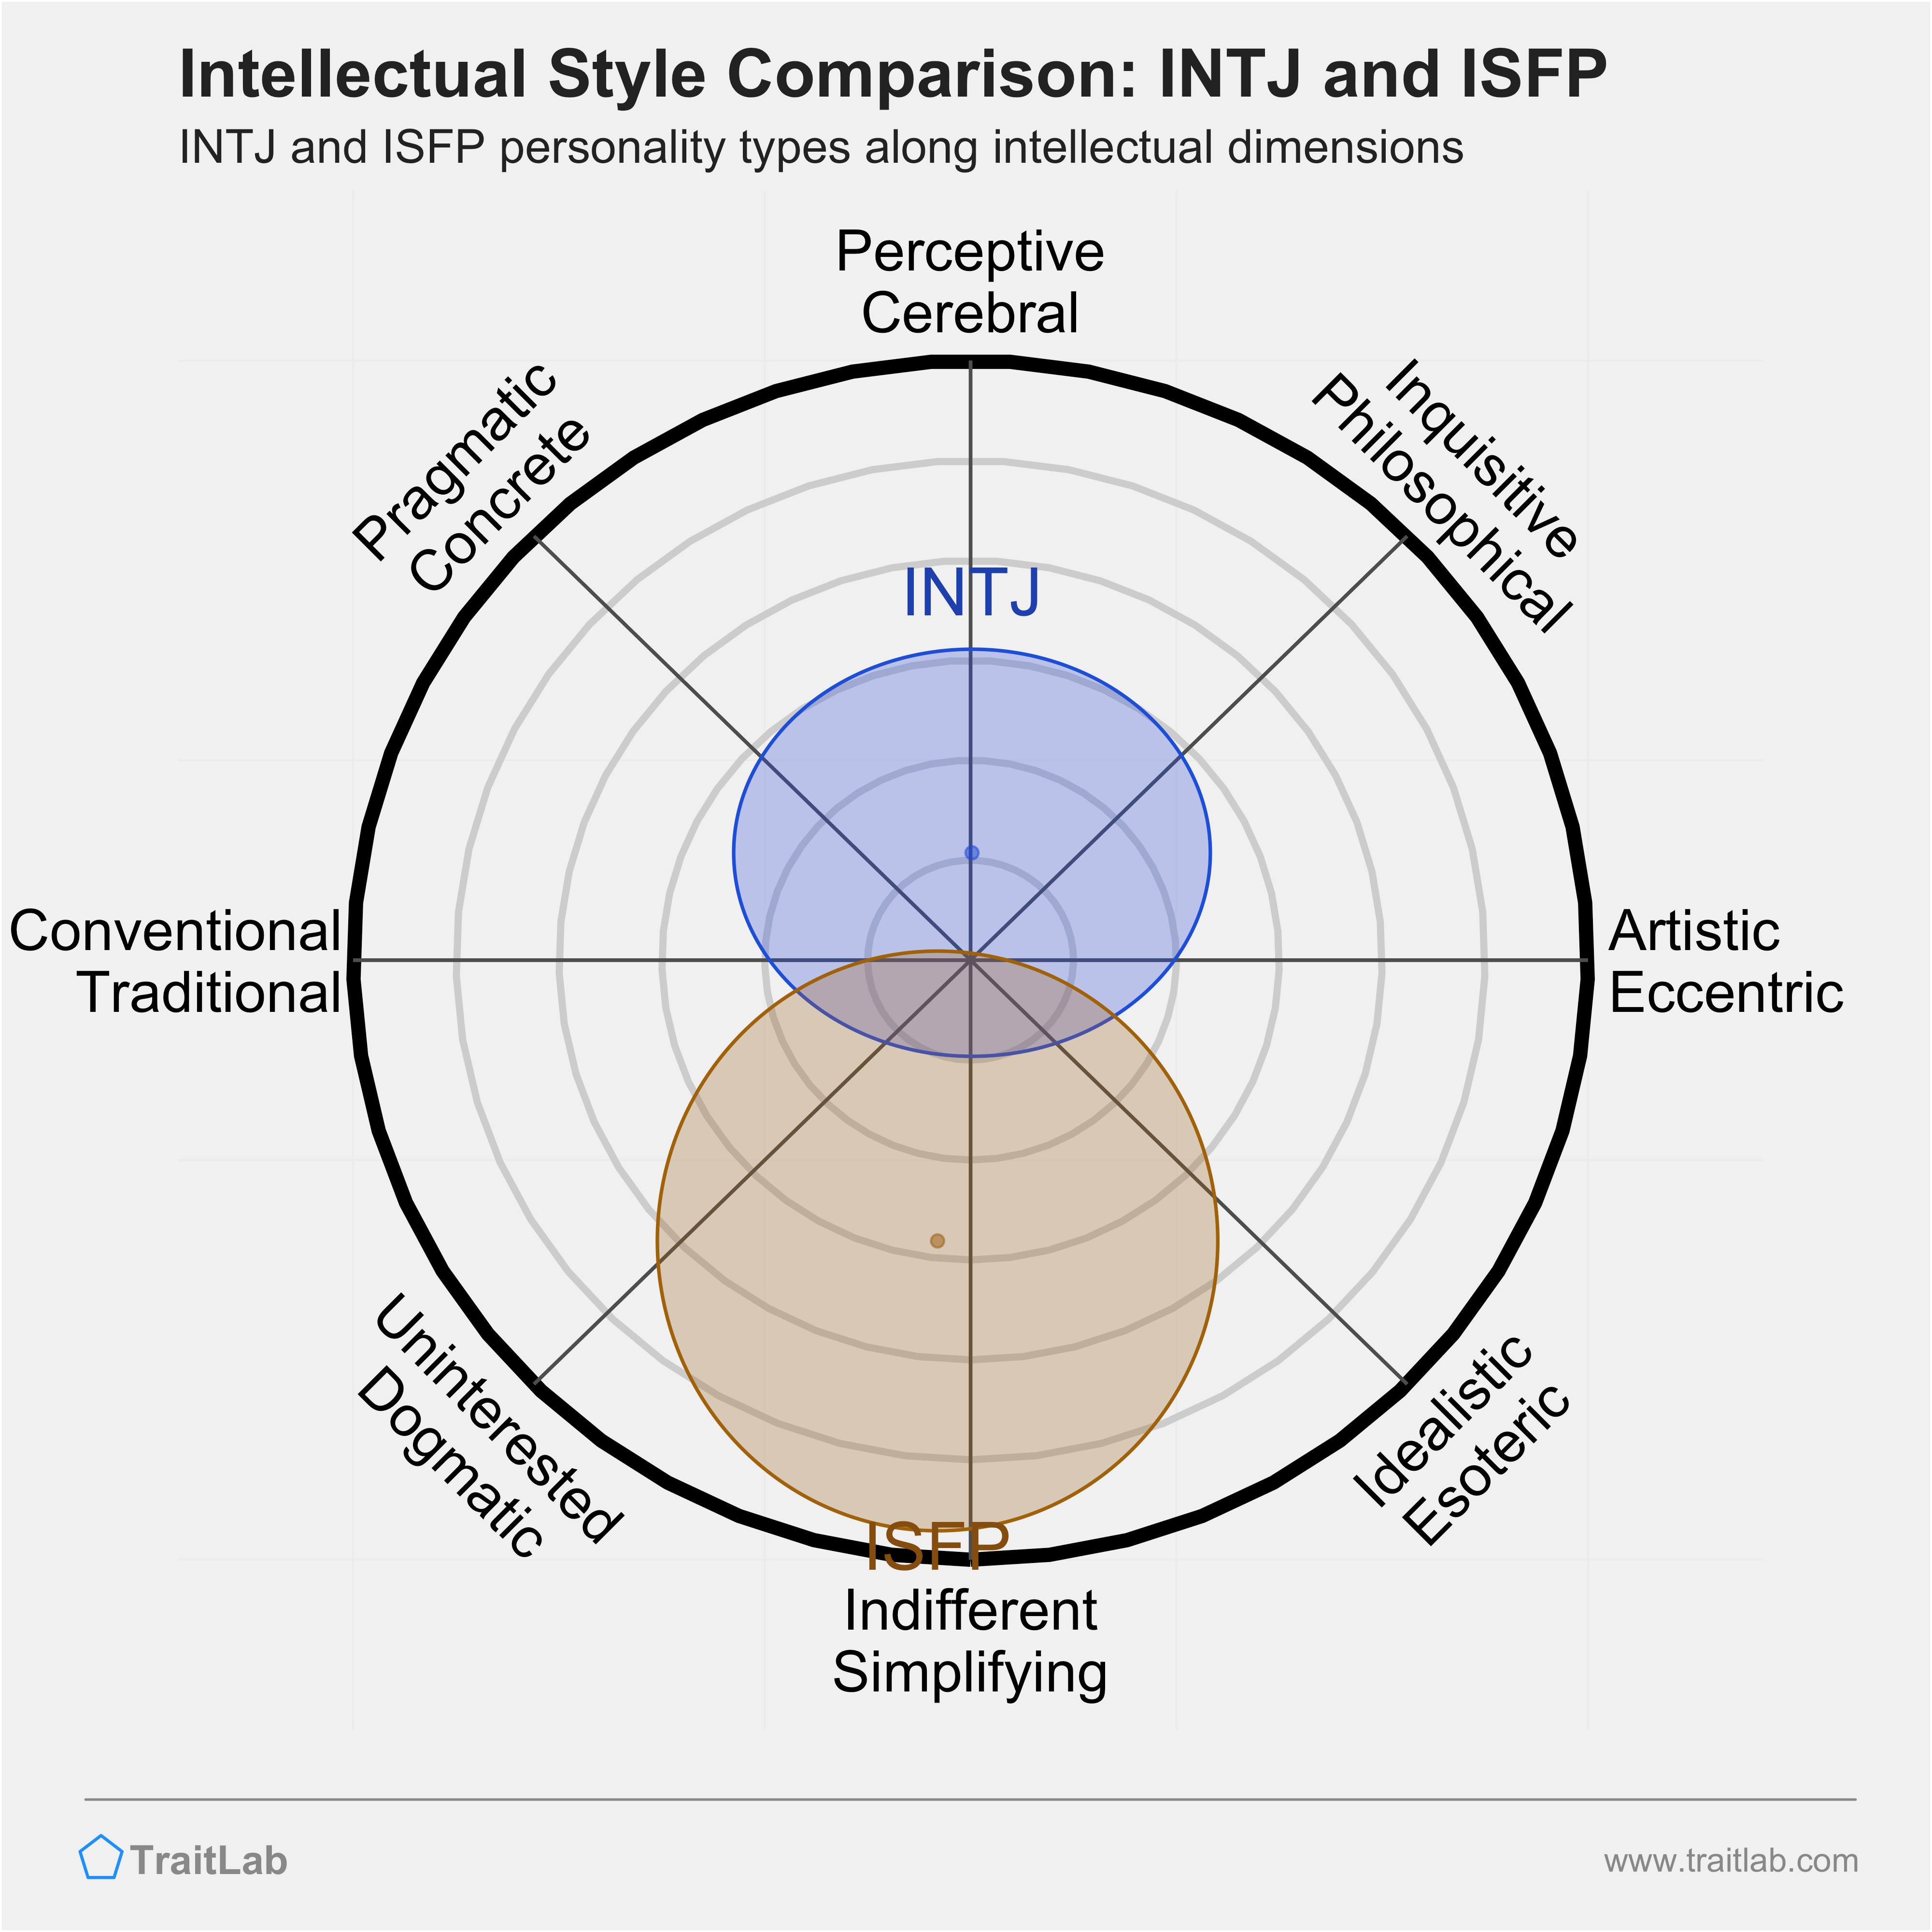 INTJ and ISFP comparison across intellectual dimensions